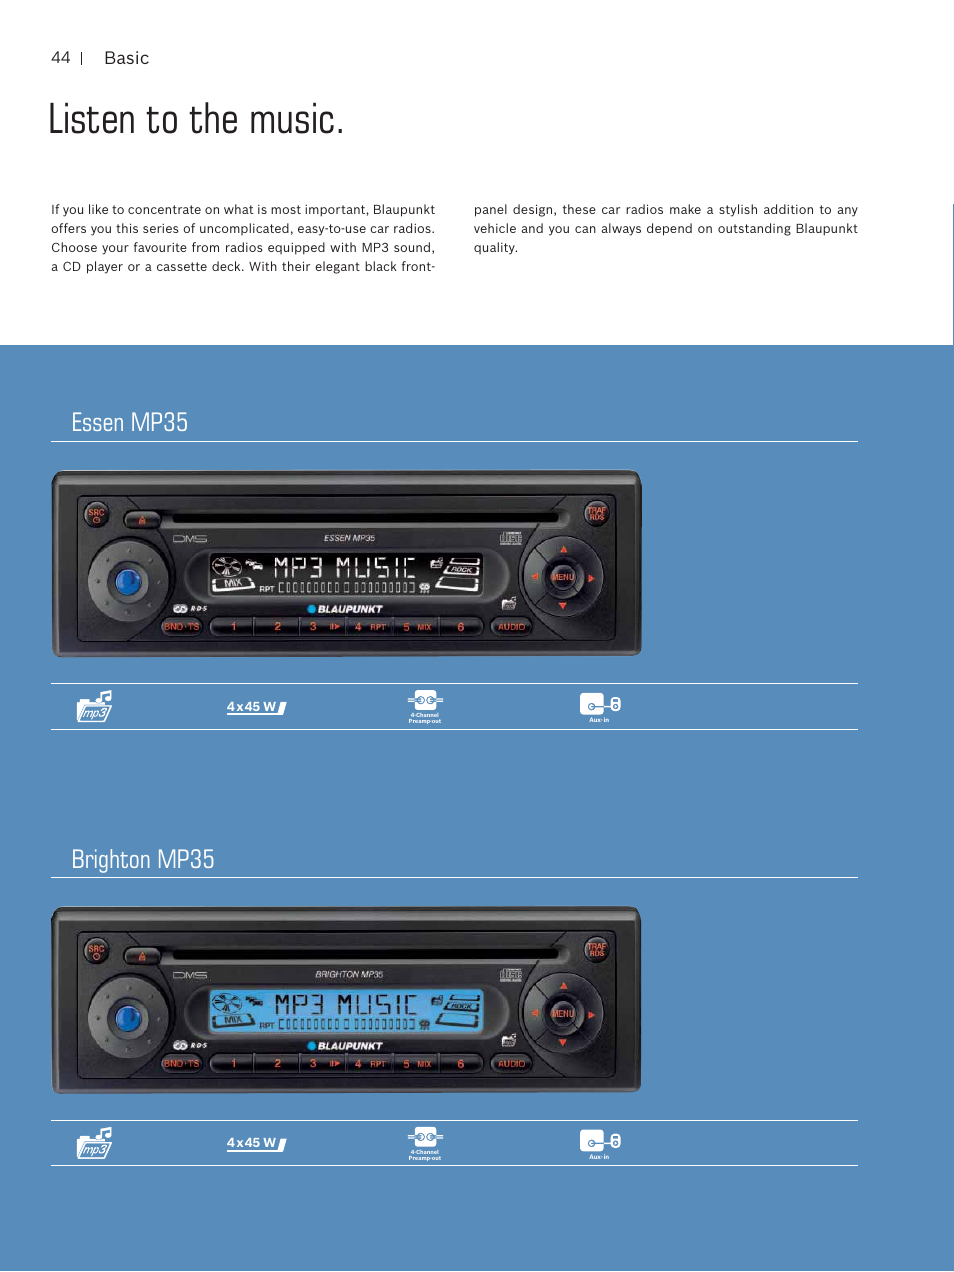 Listen to the music, Essen mp35 brighton mp35, Basic | Blaupunkt Car  Multimedia User Manual | Page 44 / 92 | Original mode